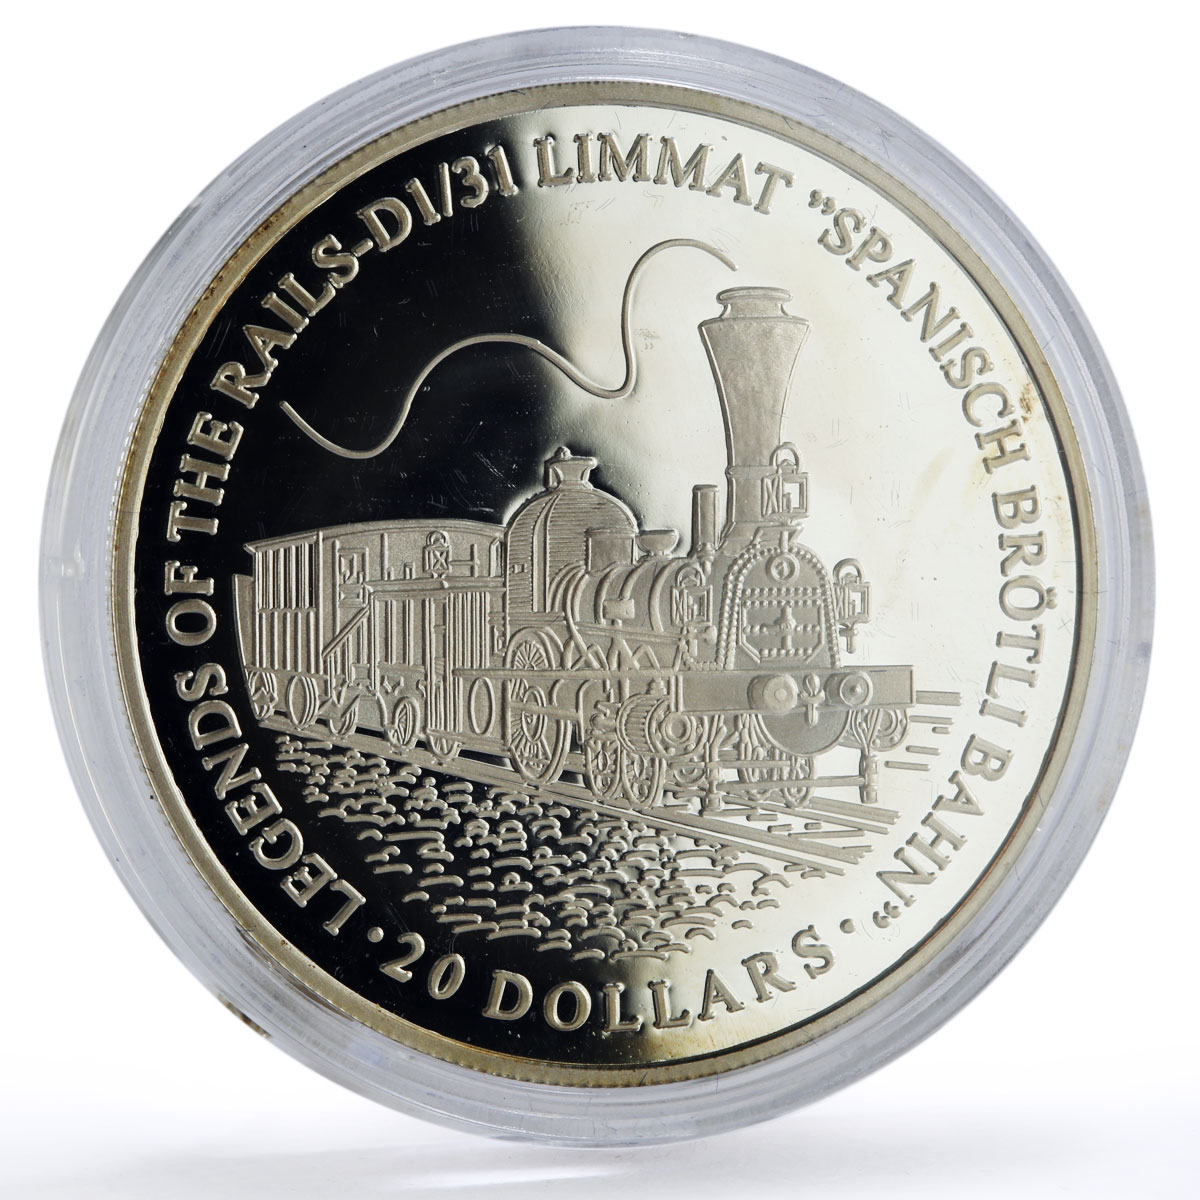 Liberia 20 dollars Trains Railway Locomotive D131 Limmat silver coin 2003